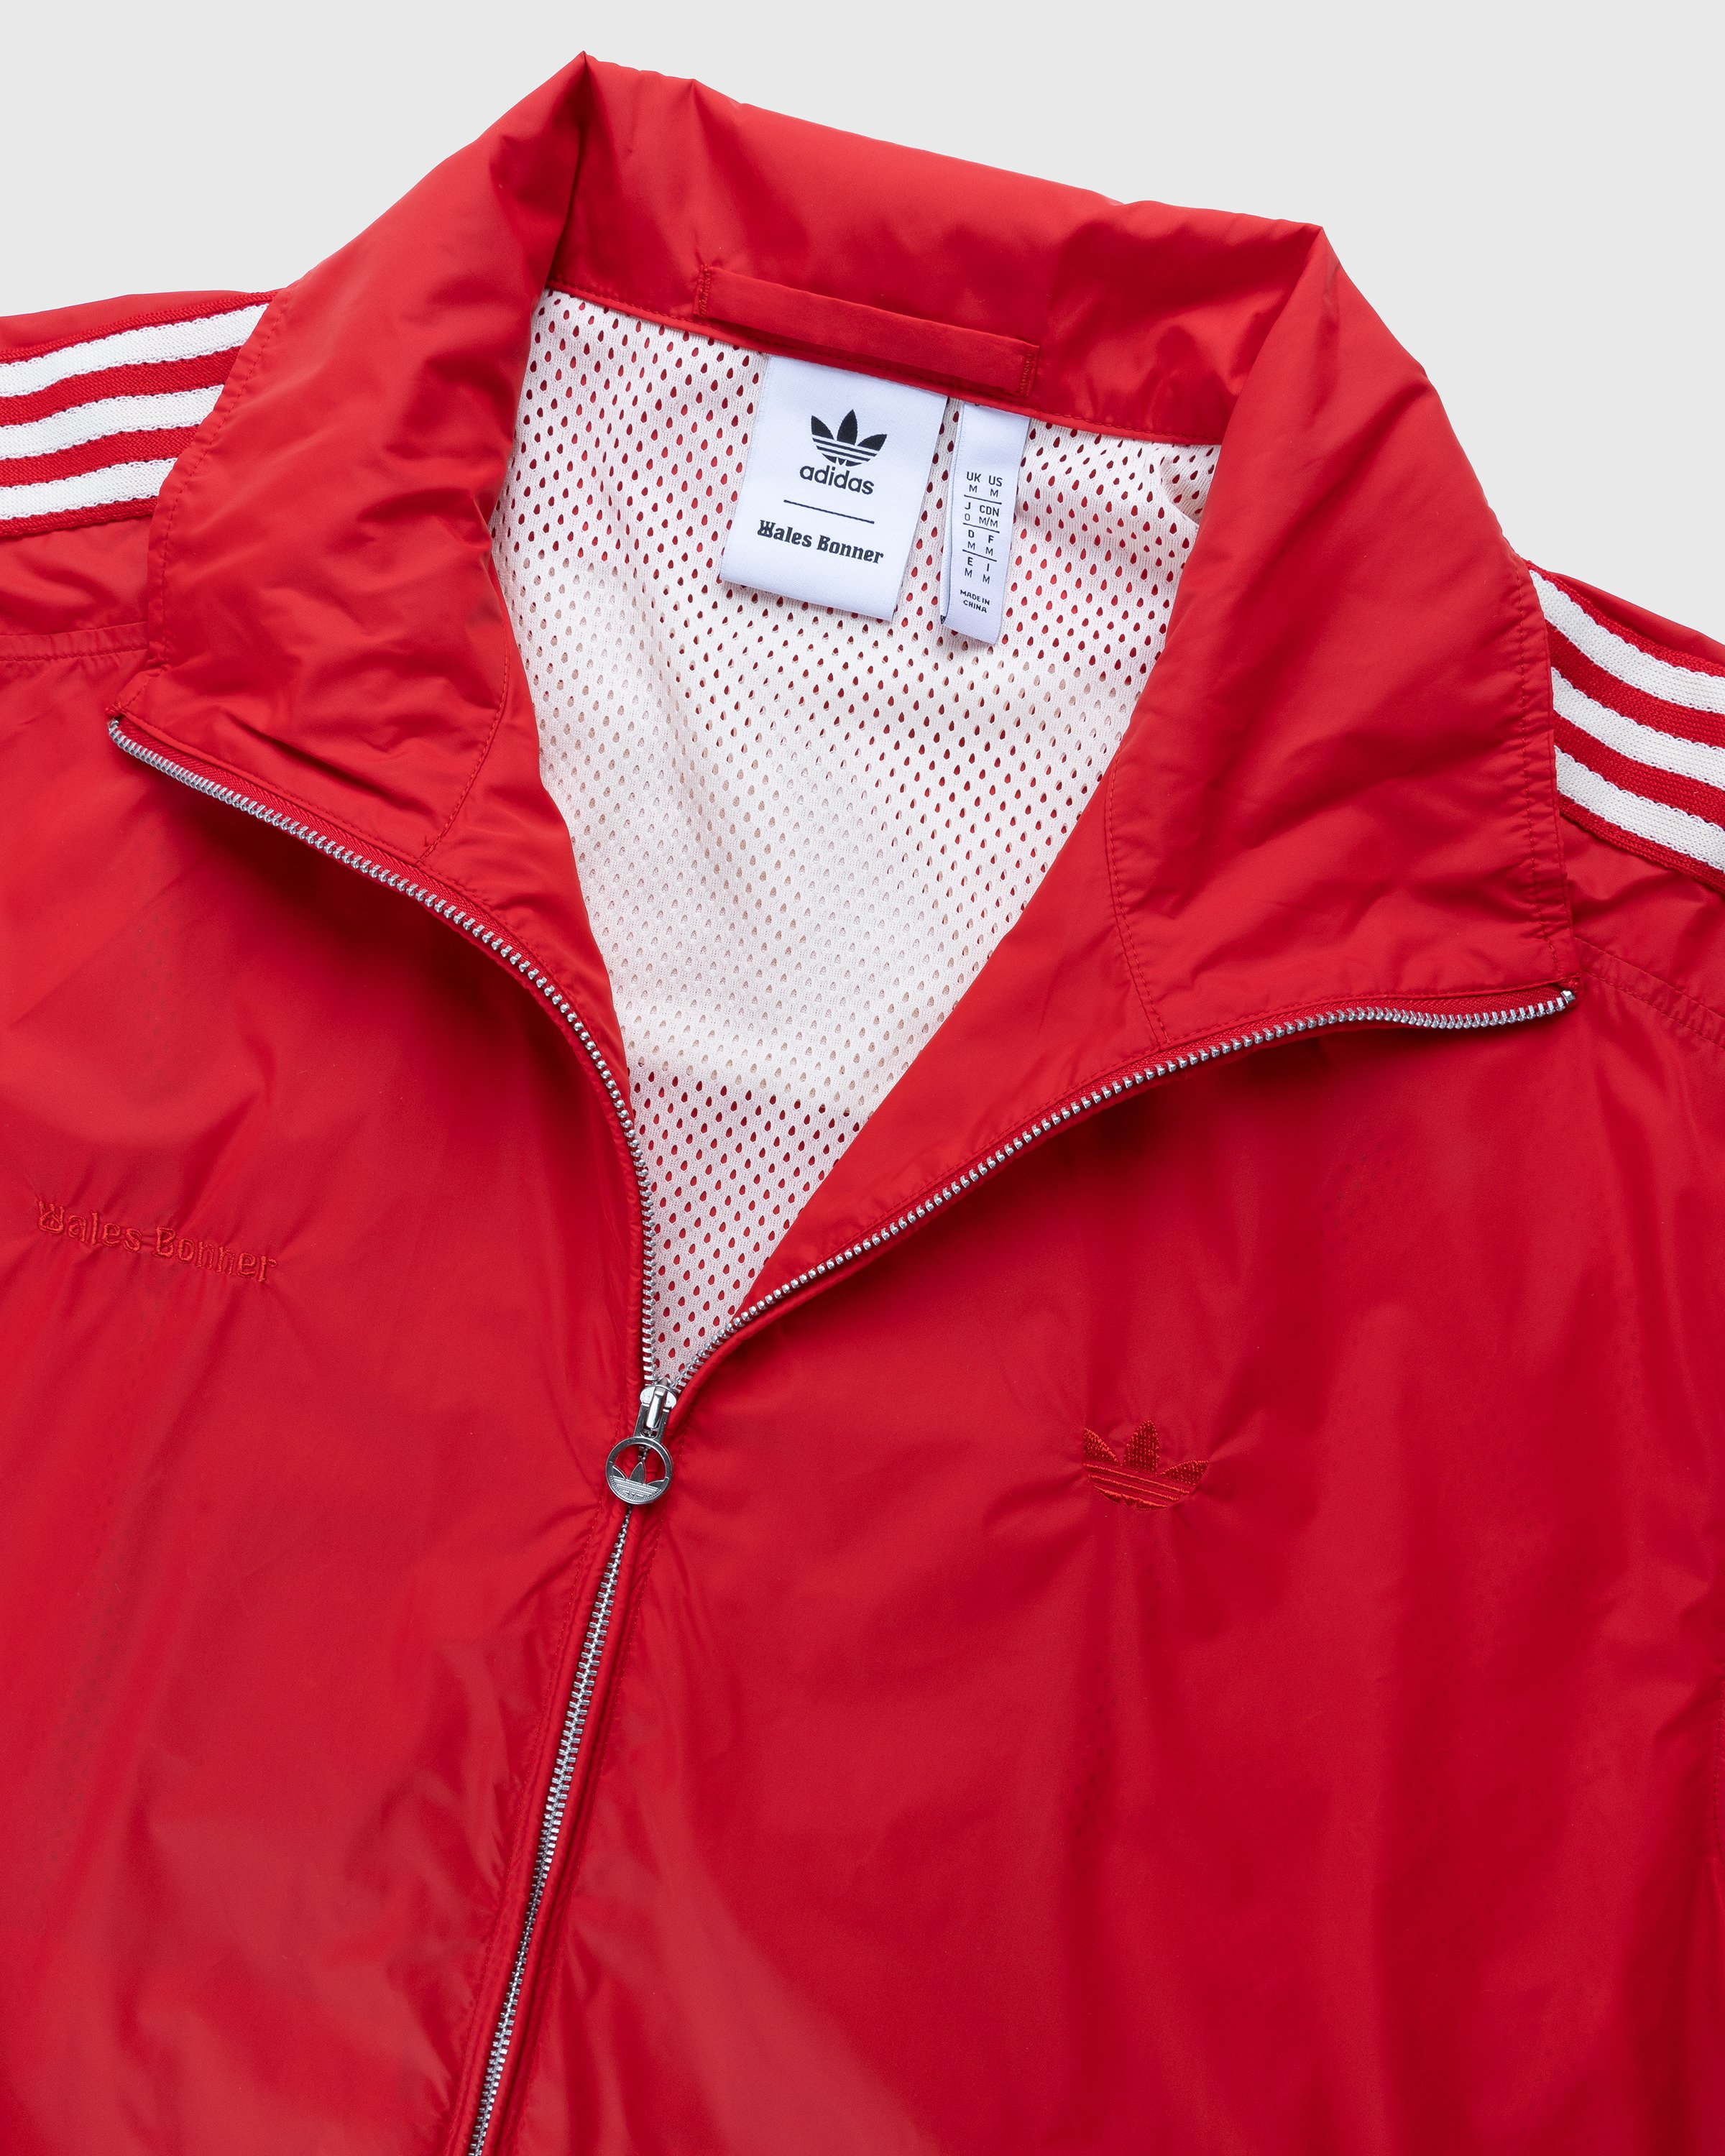 Adidas x Wales Bonner - WB Light Jacket Scarlet - Clothing - Red - Image 3